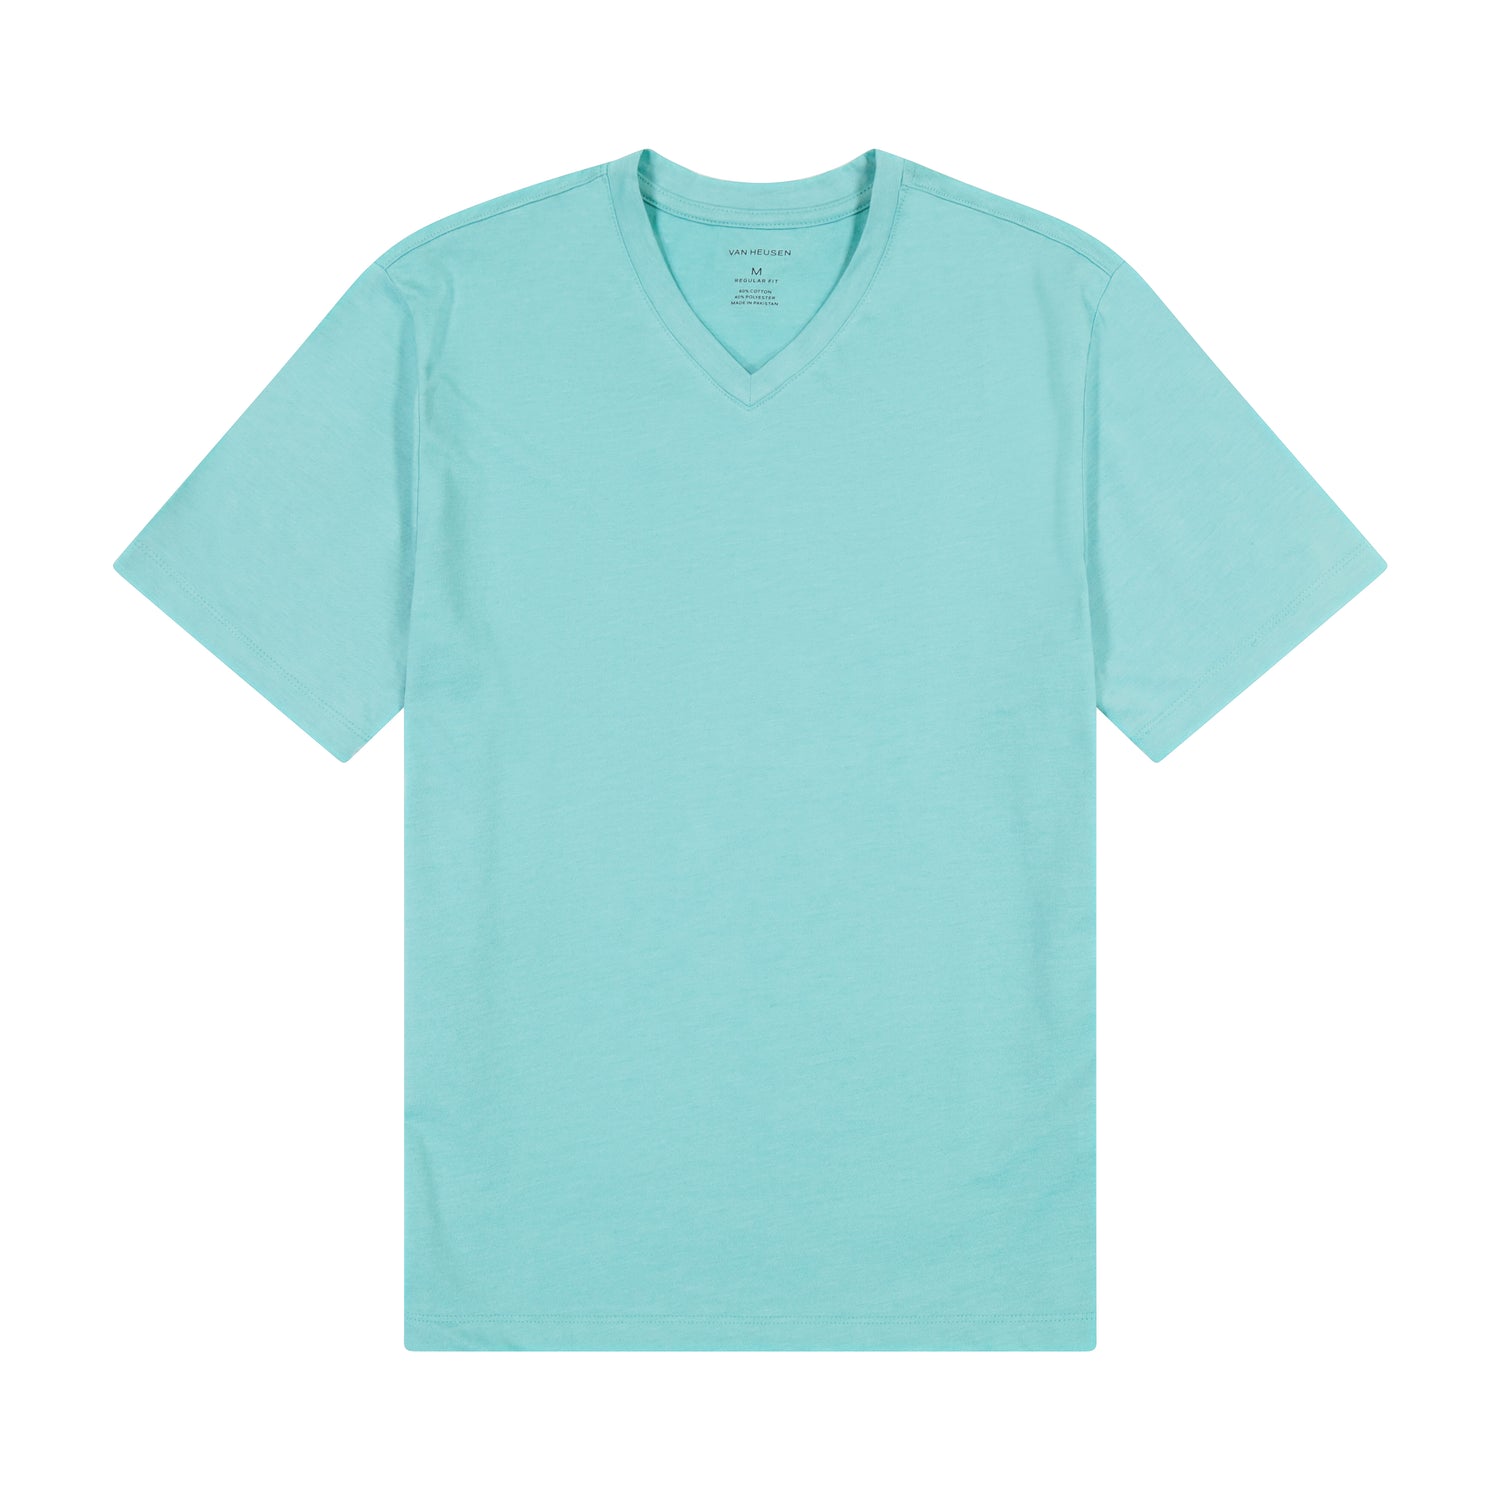 Essential Stain Shield V-Neck Short Sleeve Basic Tee Shirt